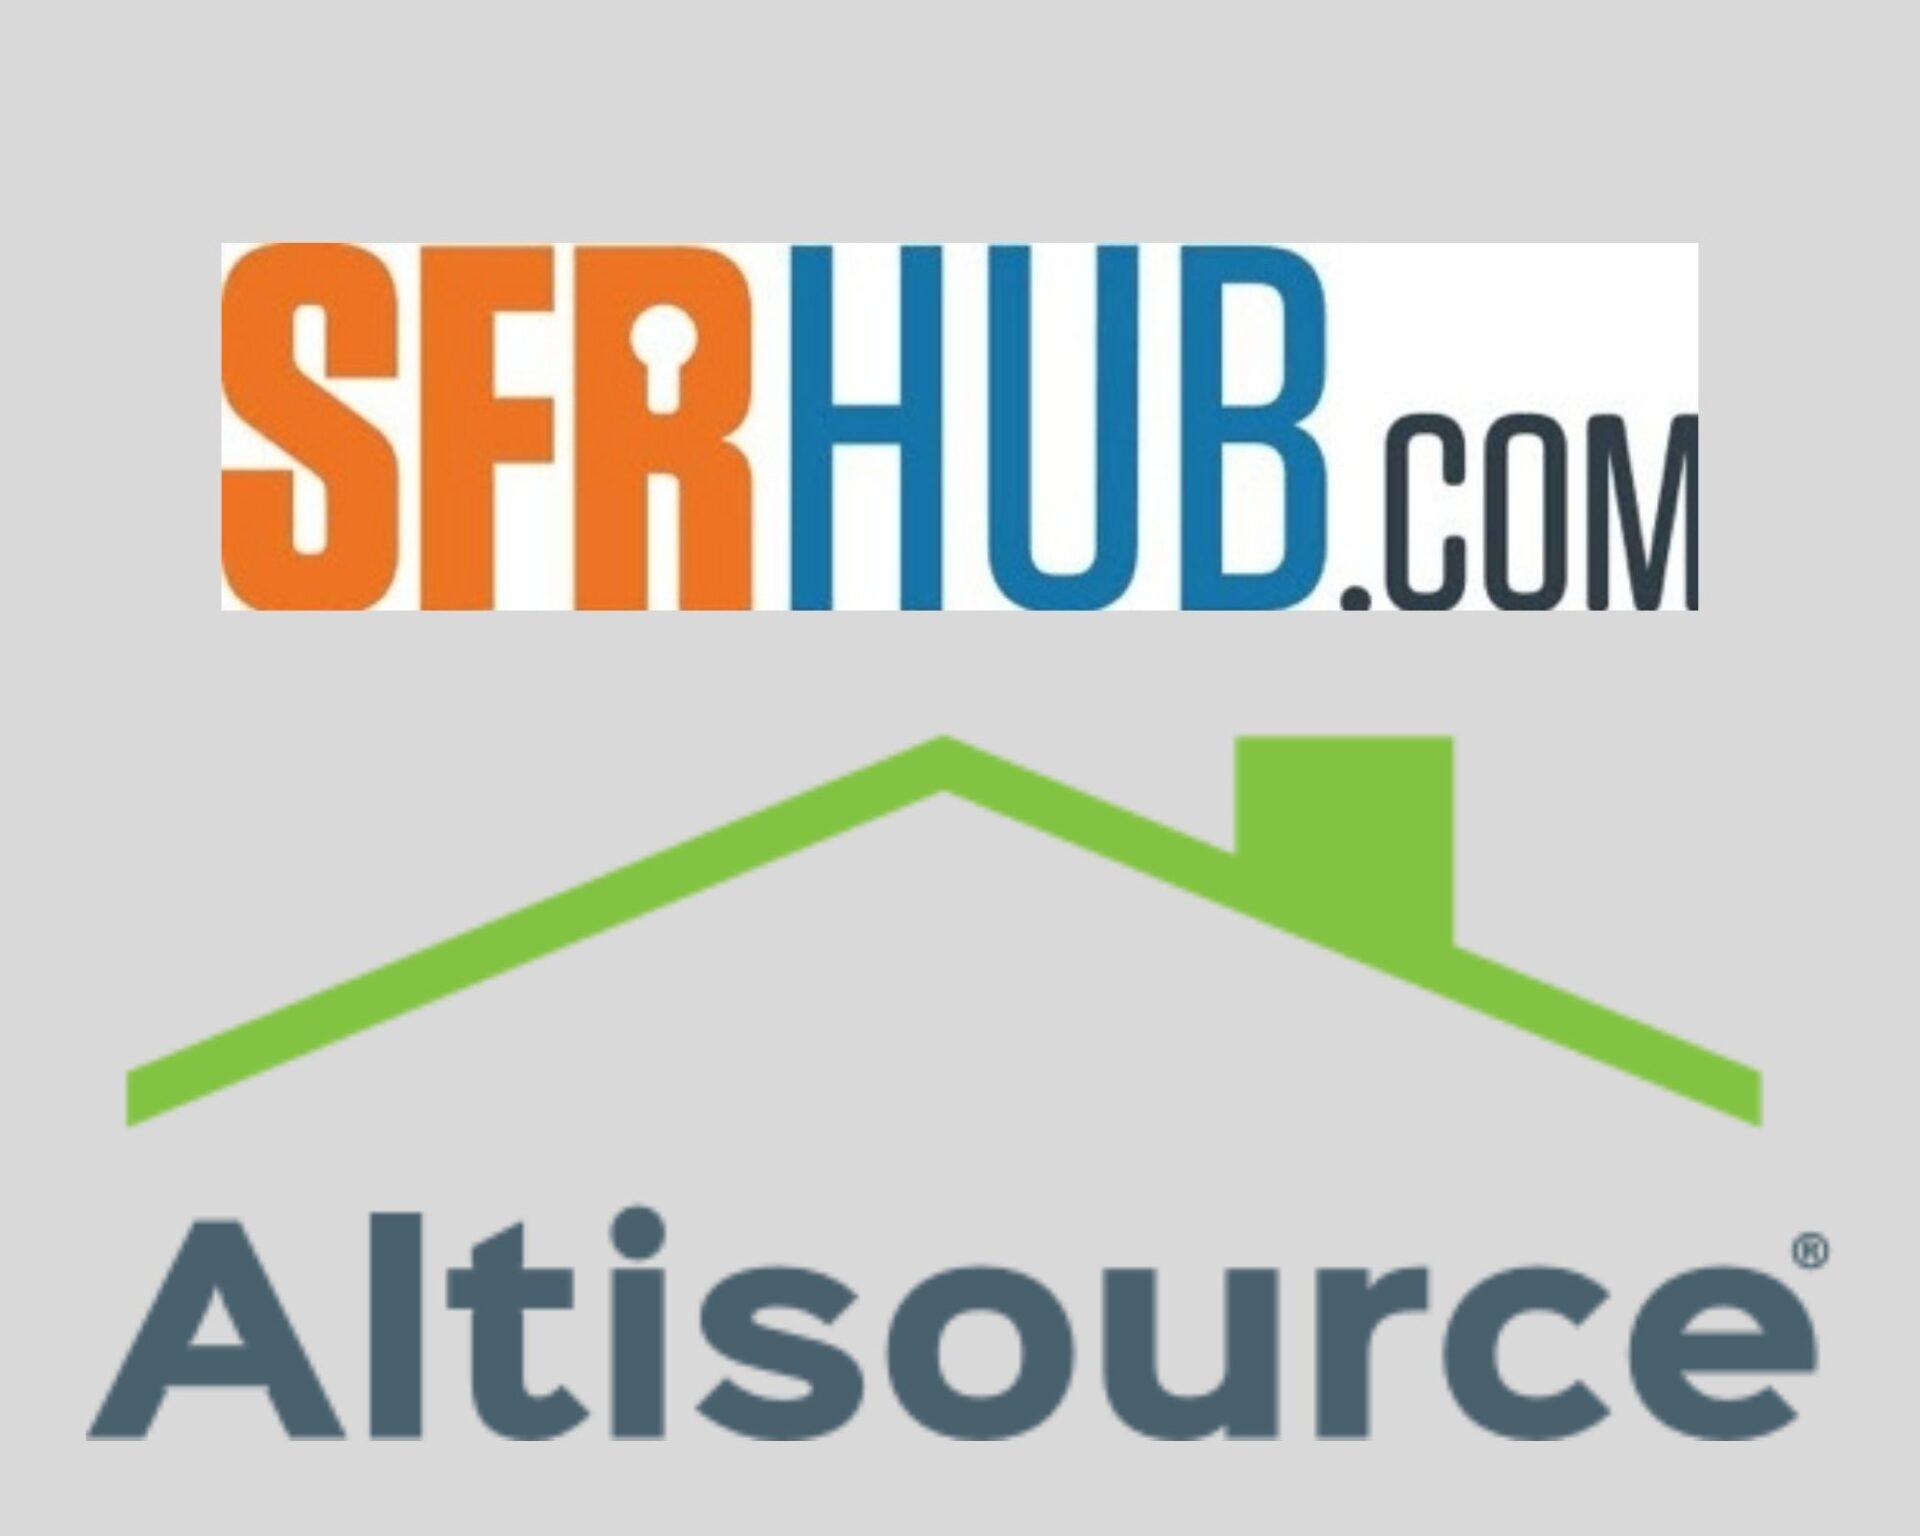 SFRhub.com Partnering With Altisource